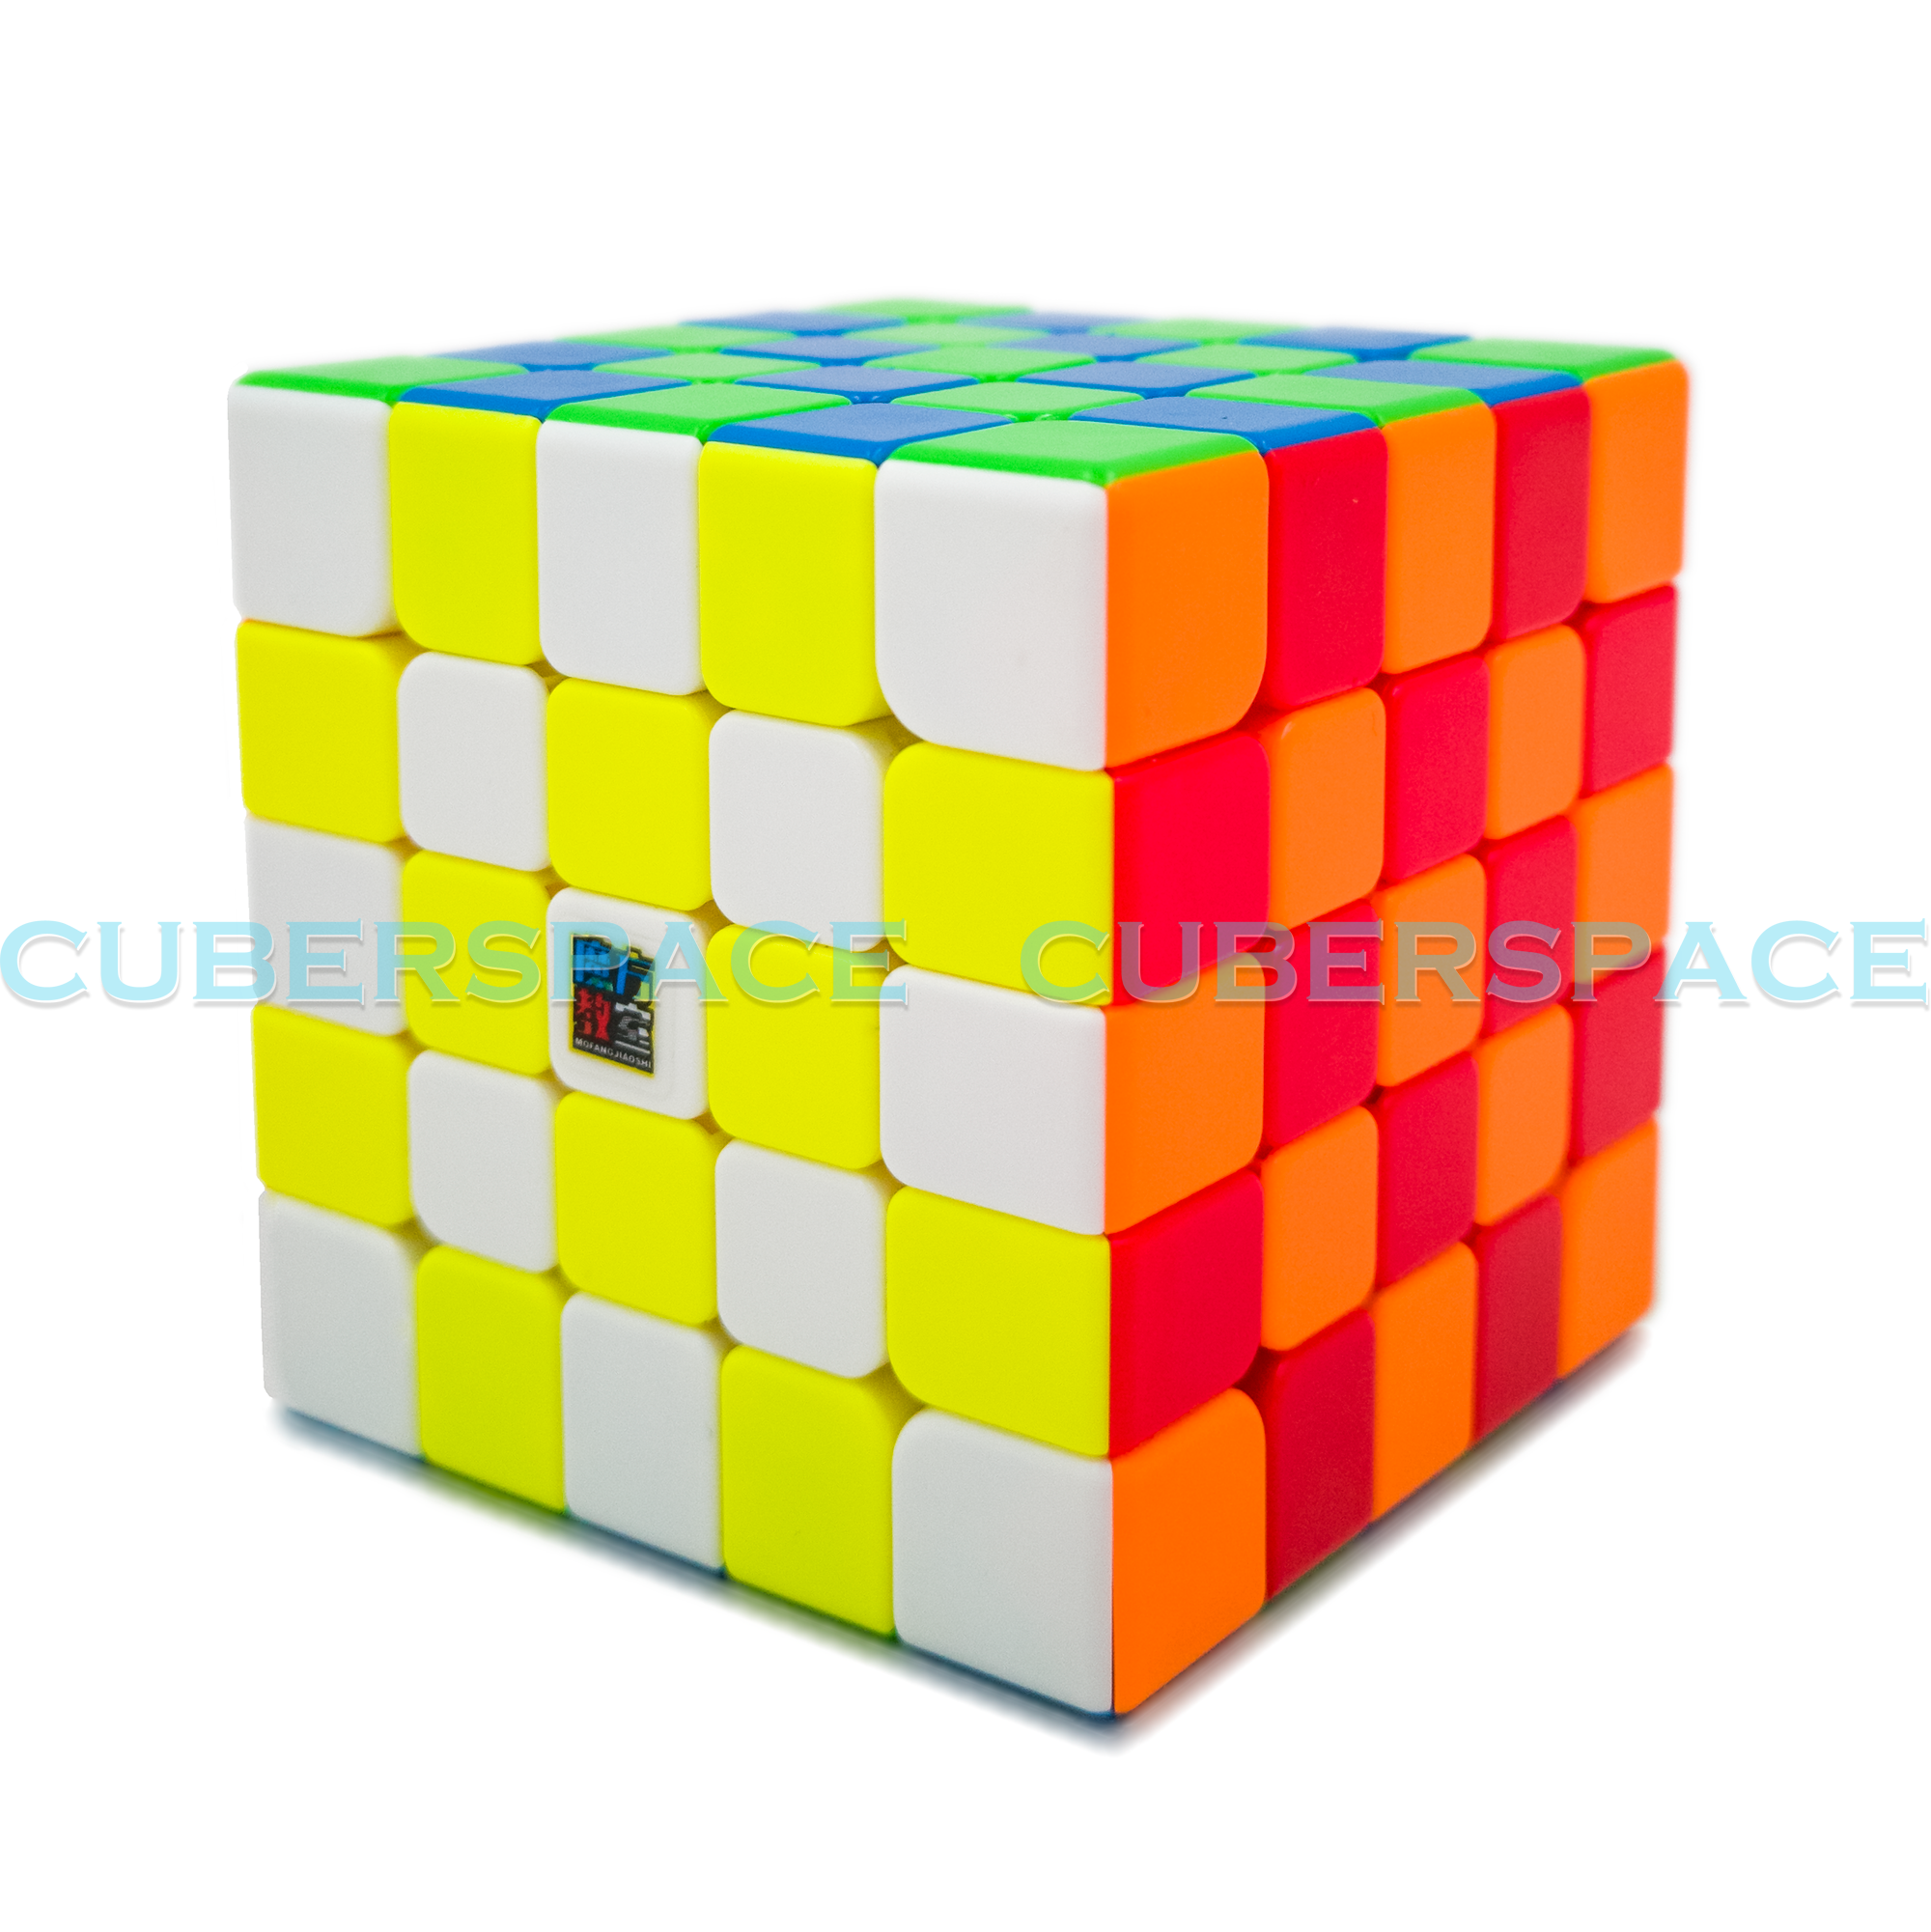 MFJS MeiLong 5x5 M - CuberSpace - Speedcube - Singapore